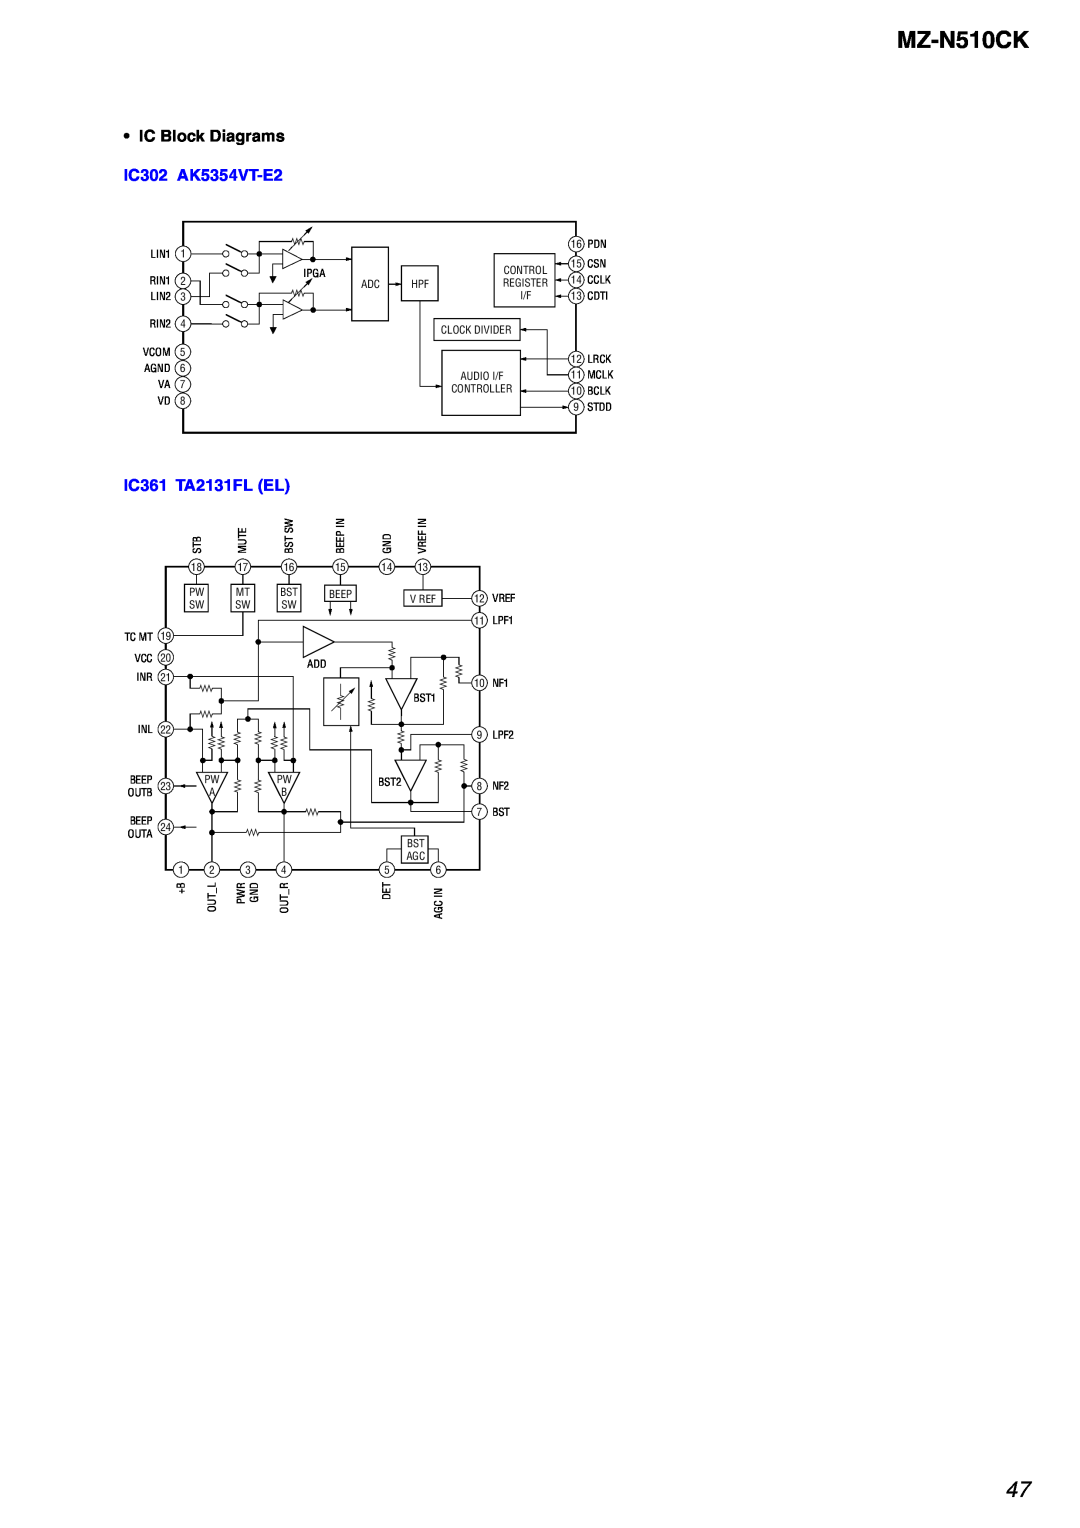 Sony MZ-N510CK service manual IC Block Diagrams IC302 AK5354VT-E2, IC361 TA2131FL EL 